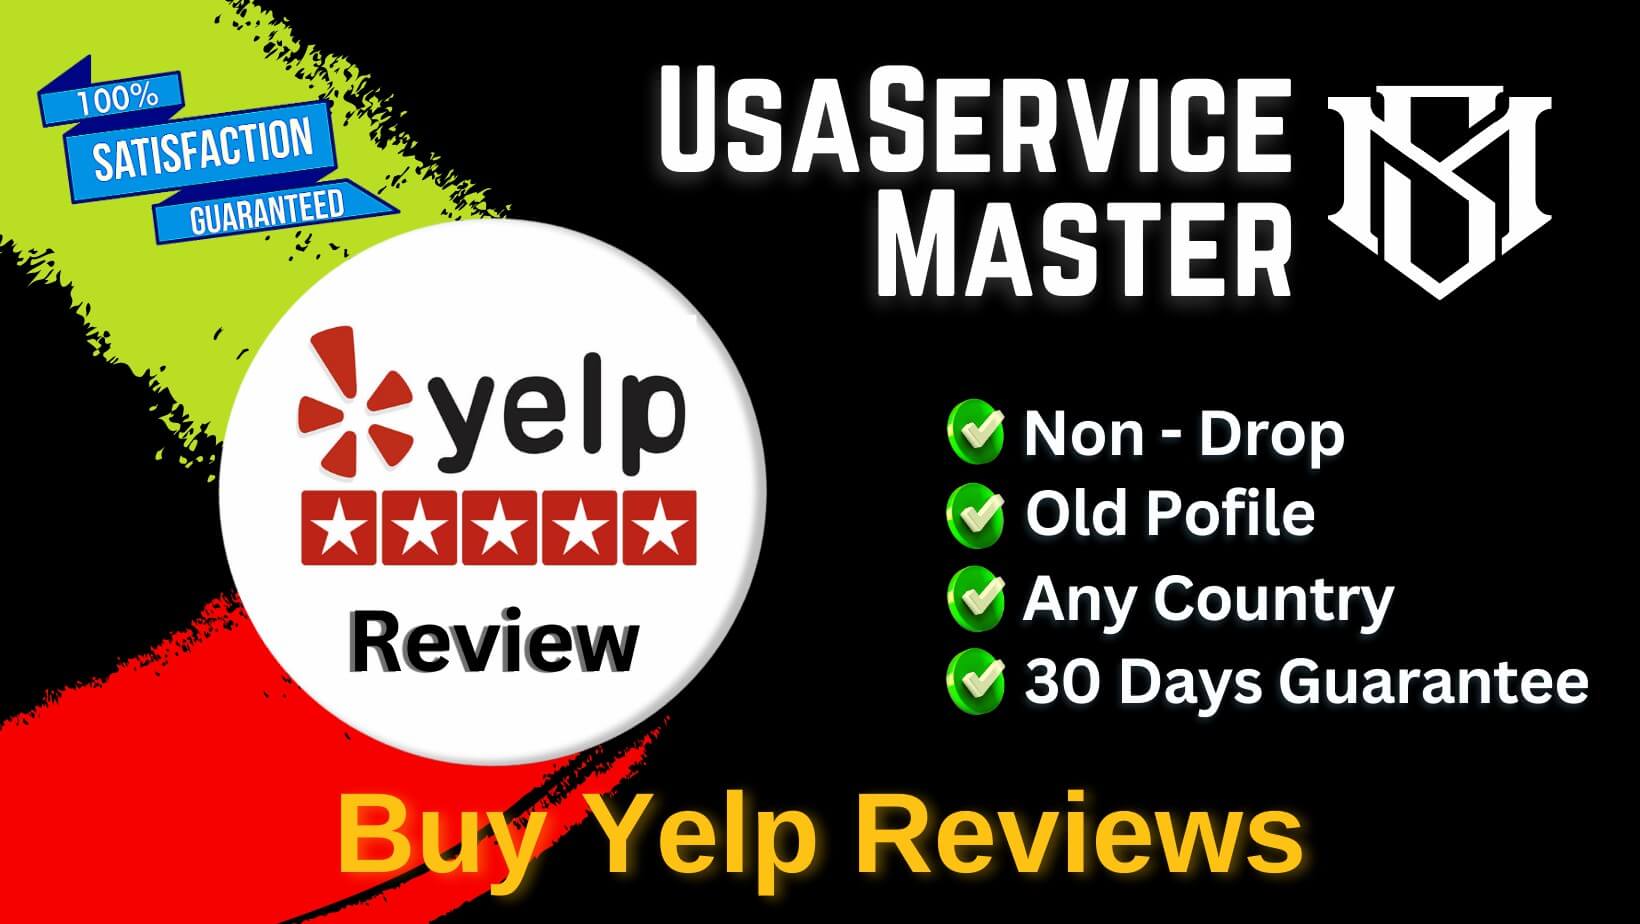 Buy Yelp Reviews - 100% Non-Drop Yelp Reviews